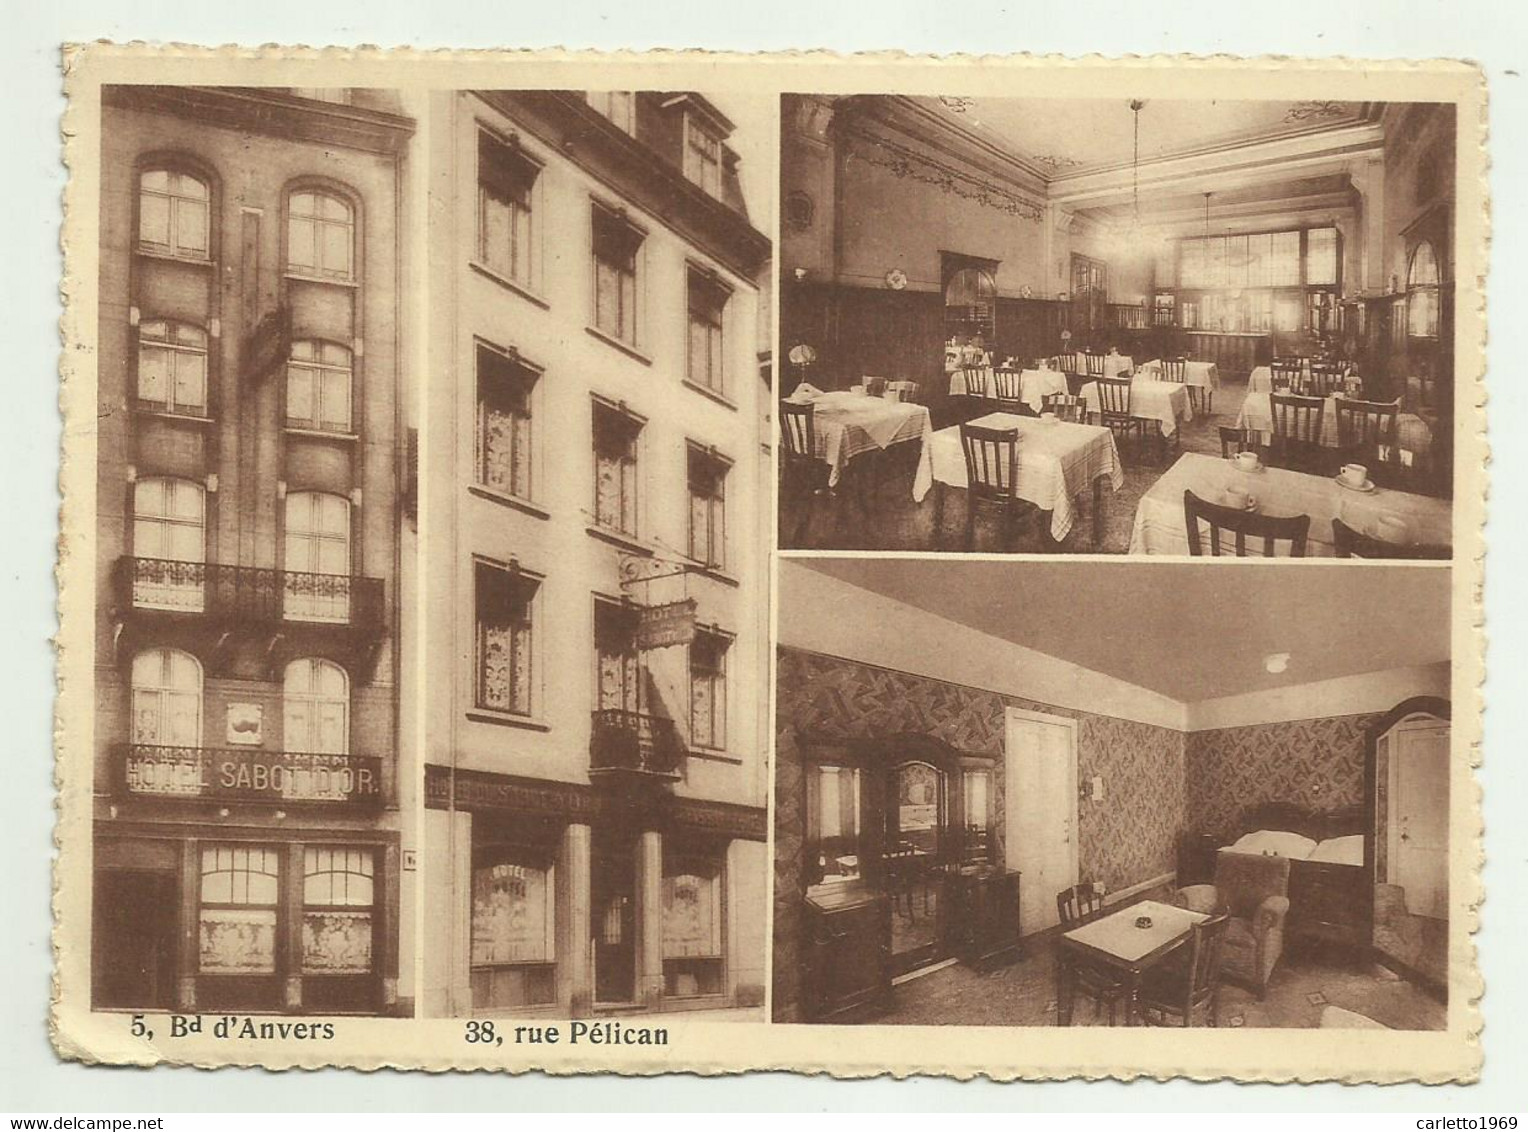 BRUXELLES NORD - HOTEL DU SABOT D'OR  - VIAGGIATA  FG - Pubs, Hotels, Restaurants